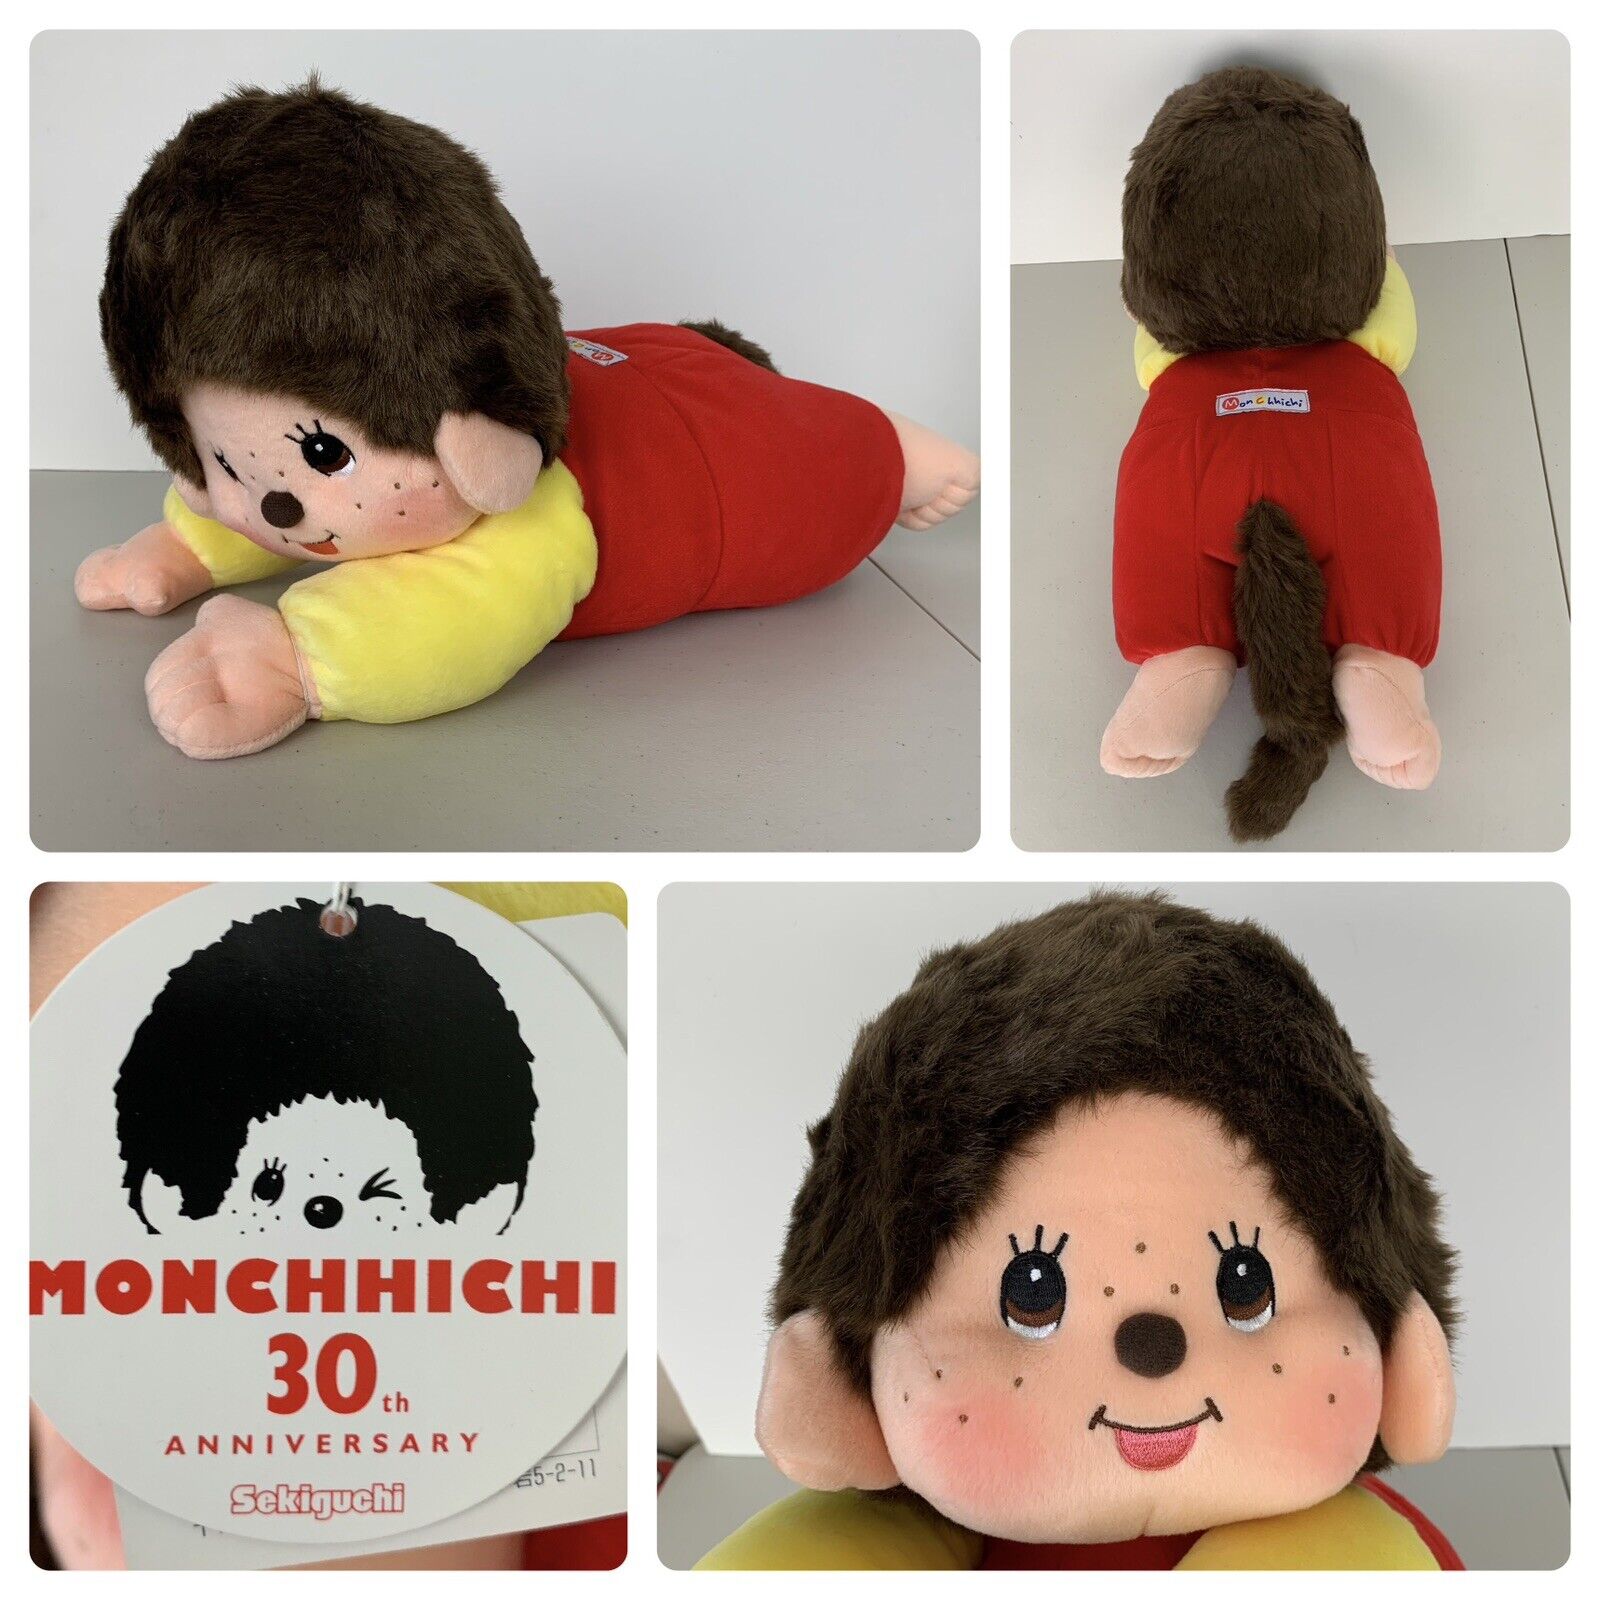 Sekiguchi Monchhichi Monchichi 30th Anniversary Baby Monkey Plush 17”